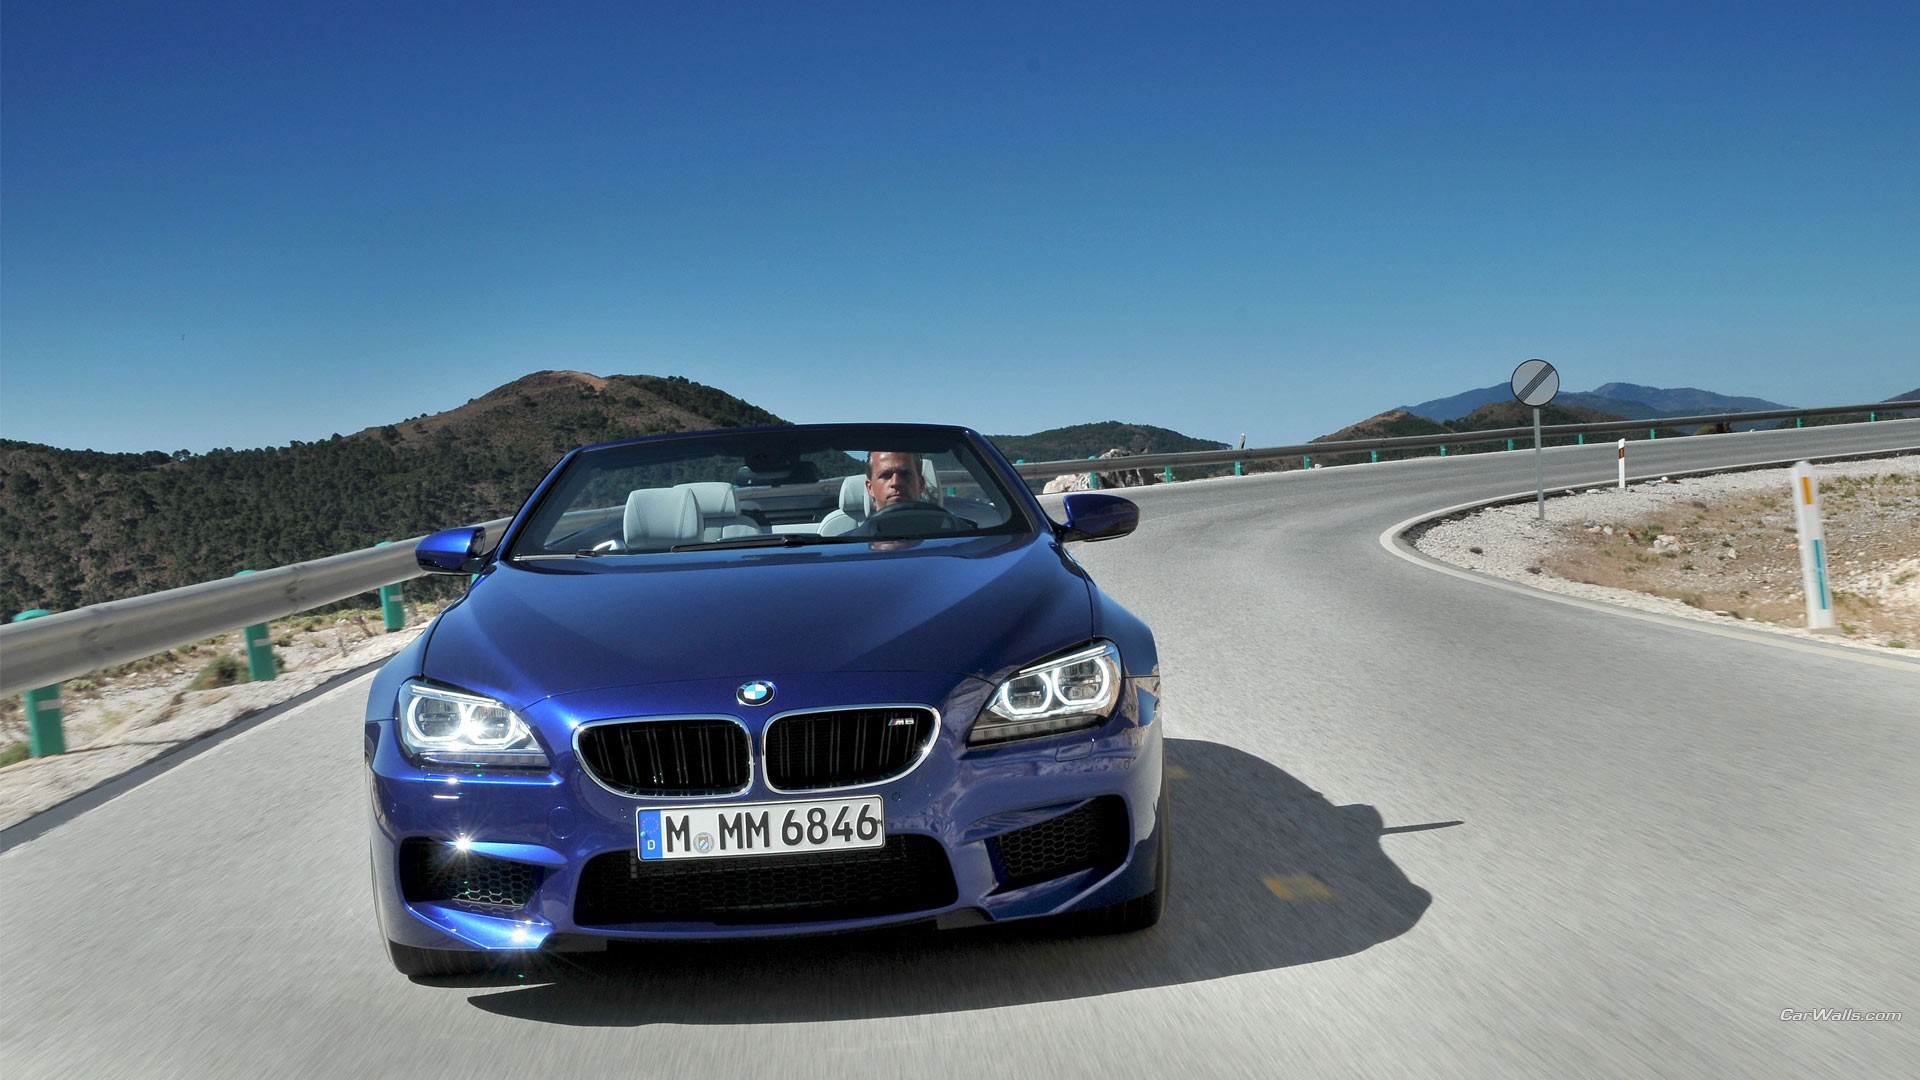 BMW M6, Convertible, Car Wallpaper